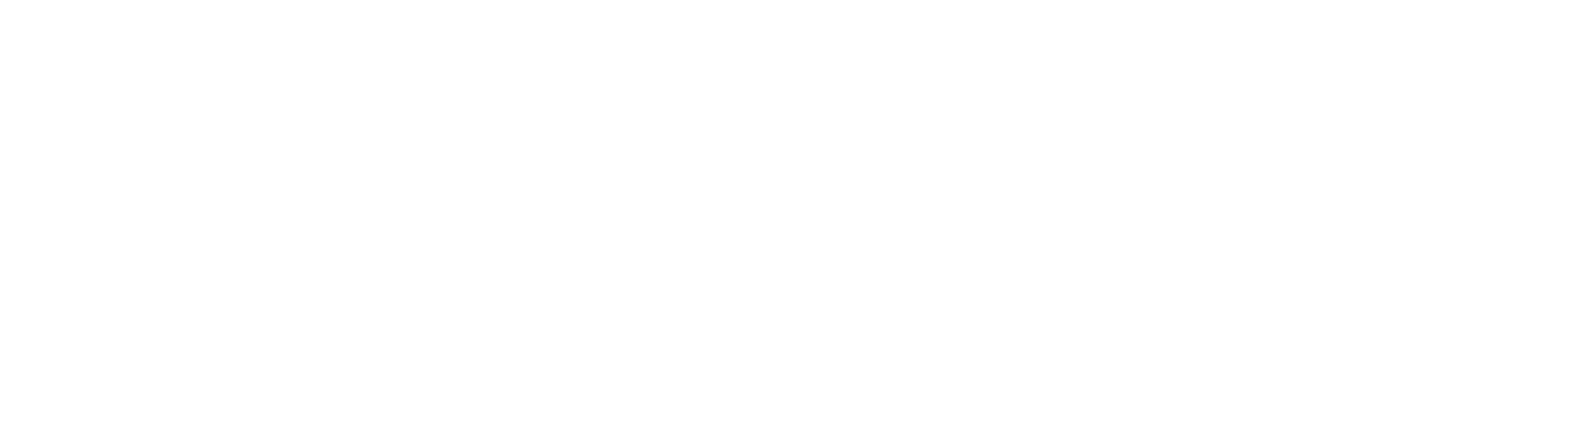 Focus Financial Partners
 Logo groß für dunkle Hintergründe (transparentes PNG)